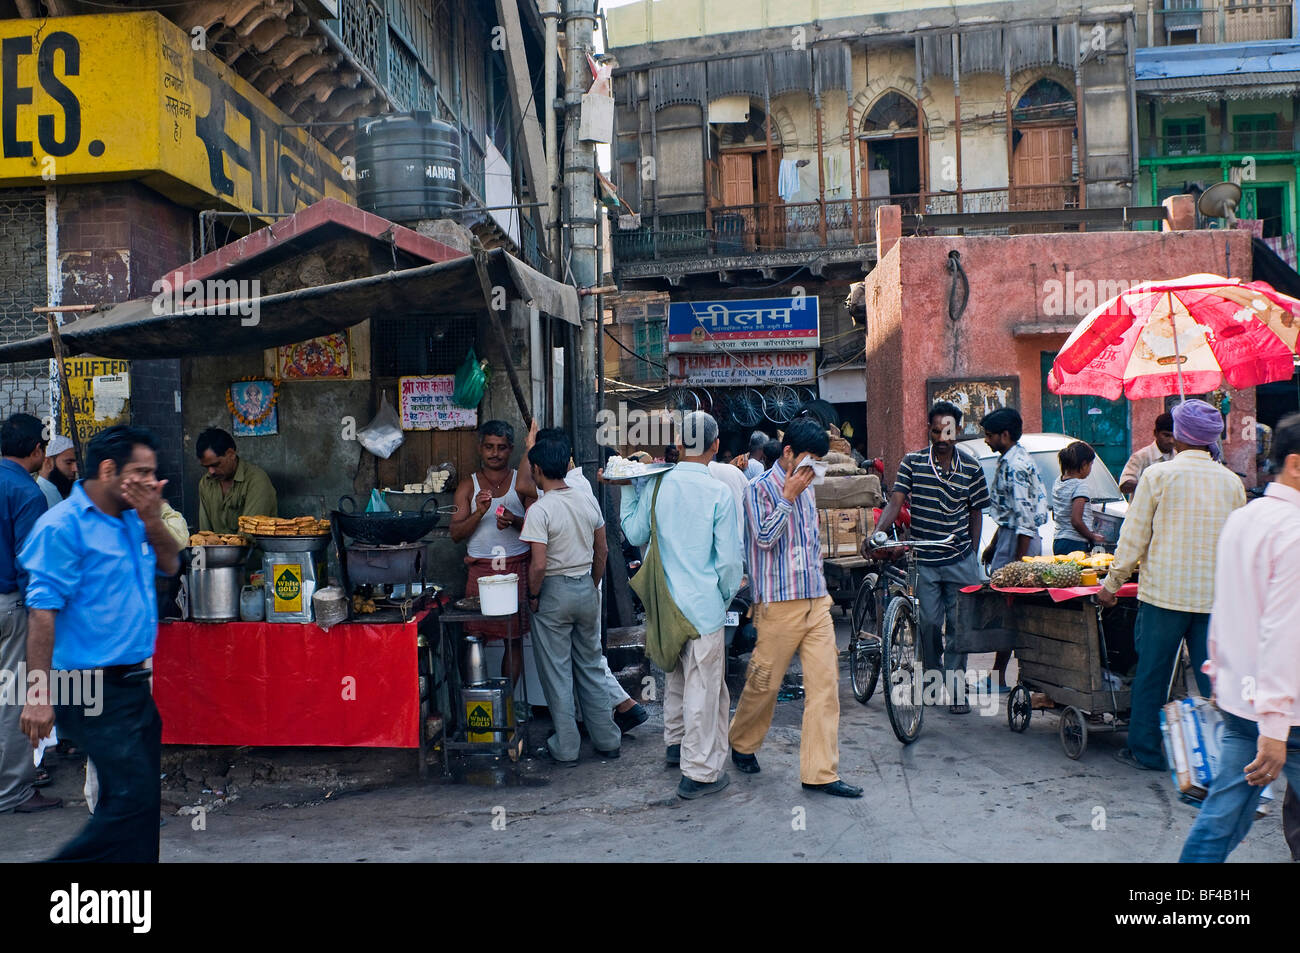 Street scene with snack bar, Old Delhi, India, Asia Stock Photo